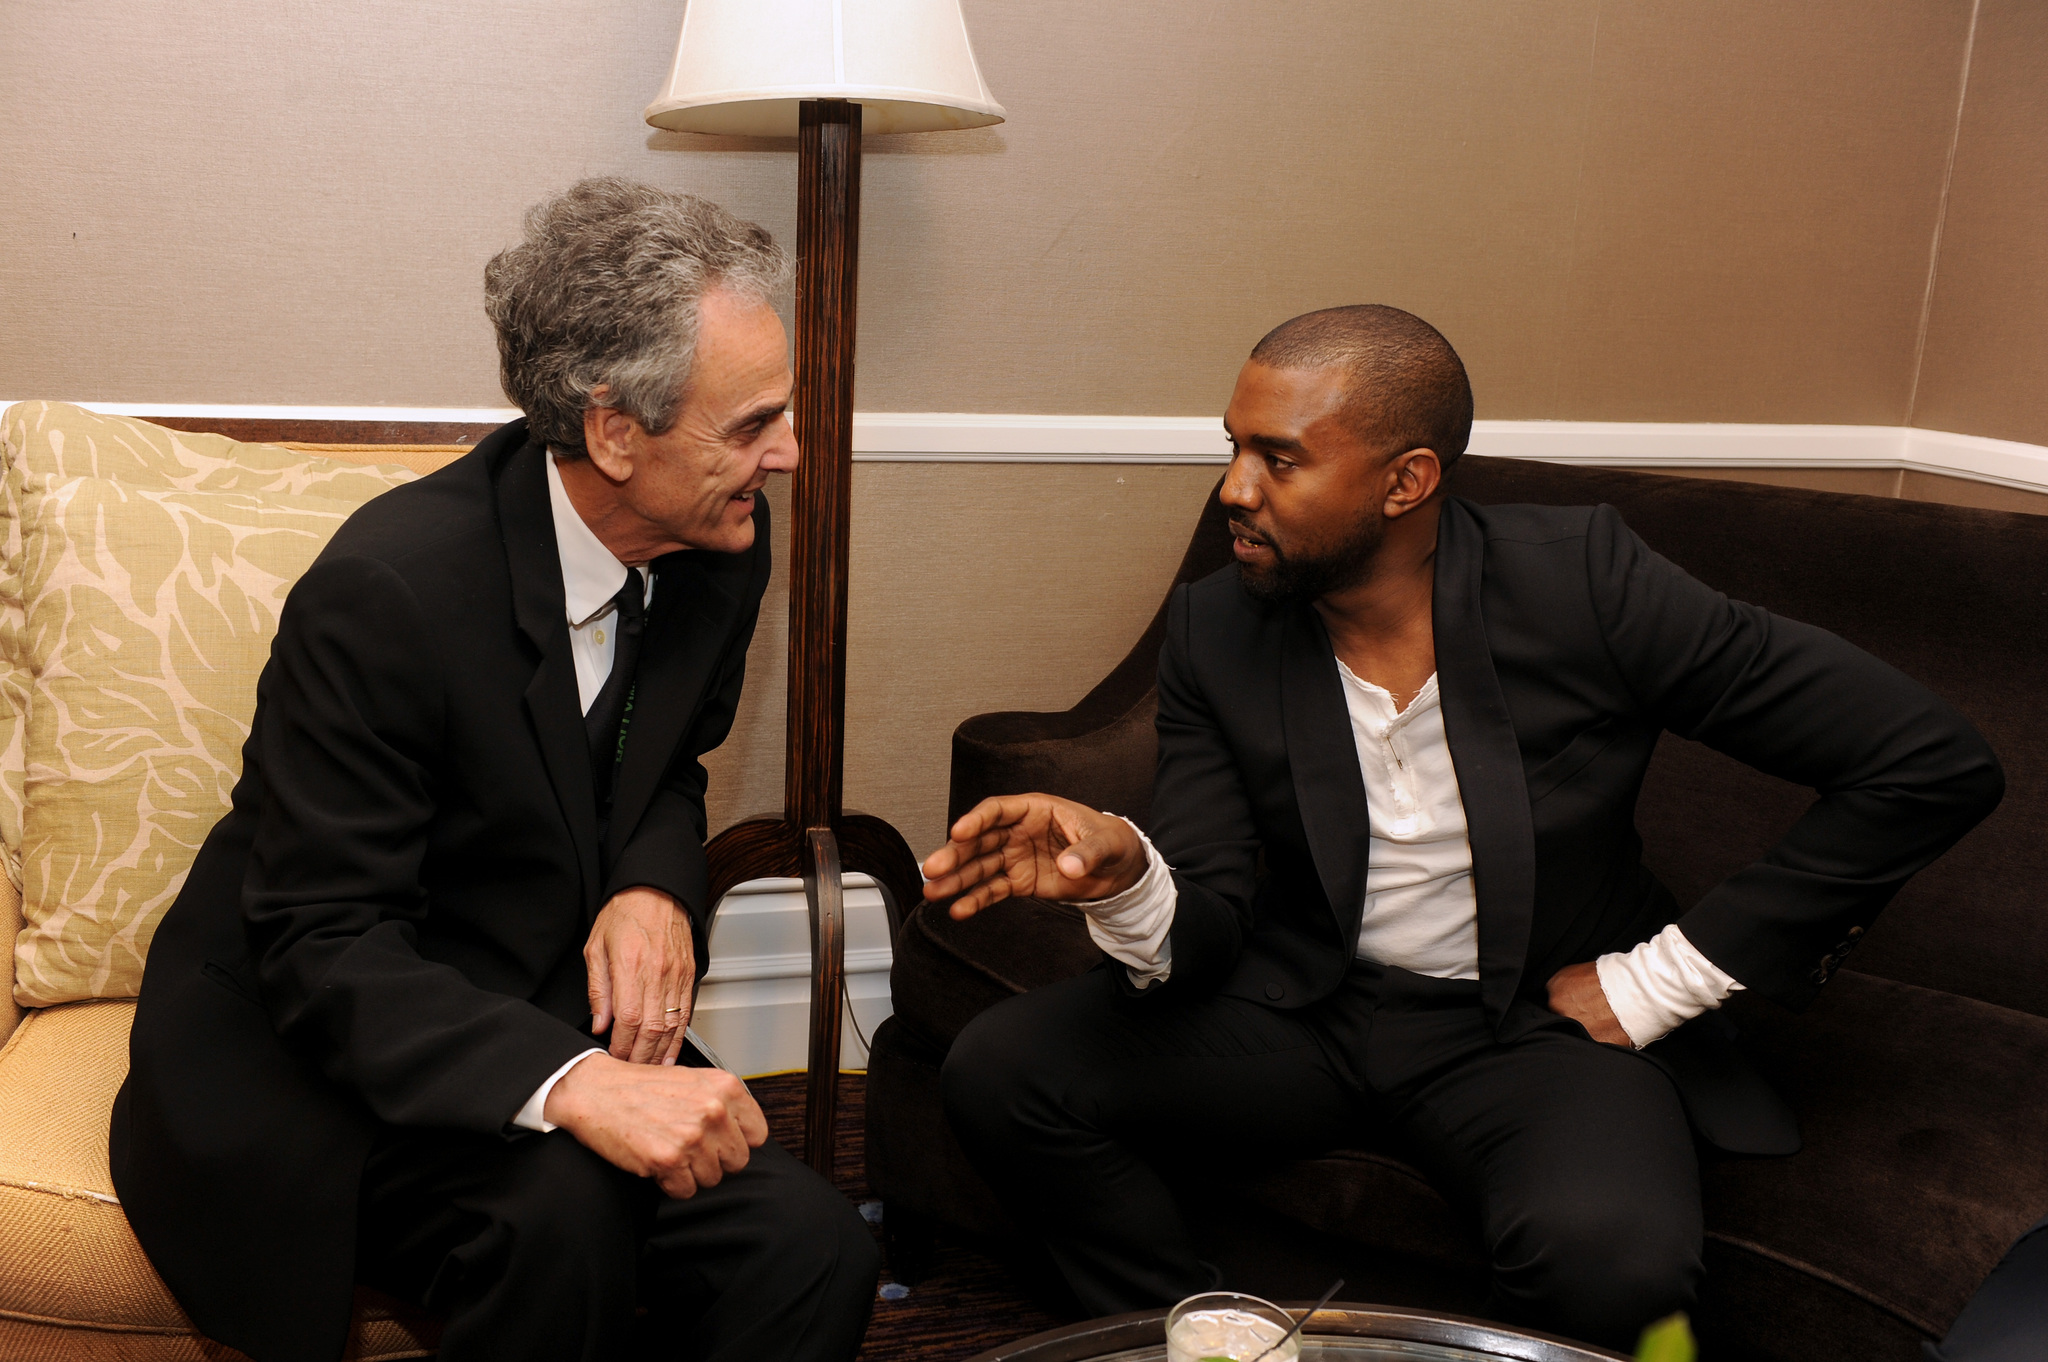 Allen Shapiro and Kanye West